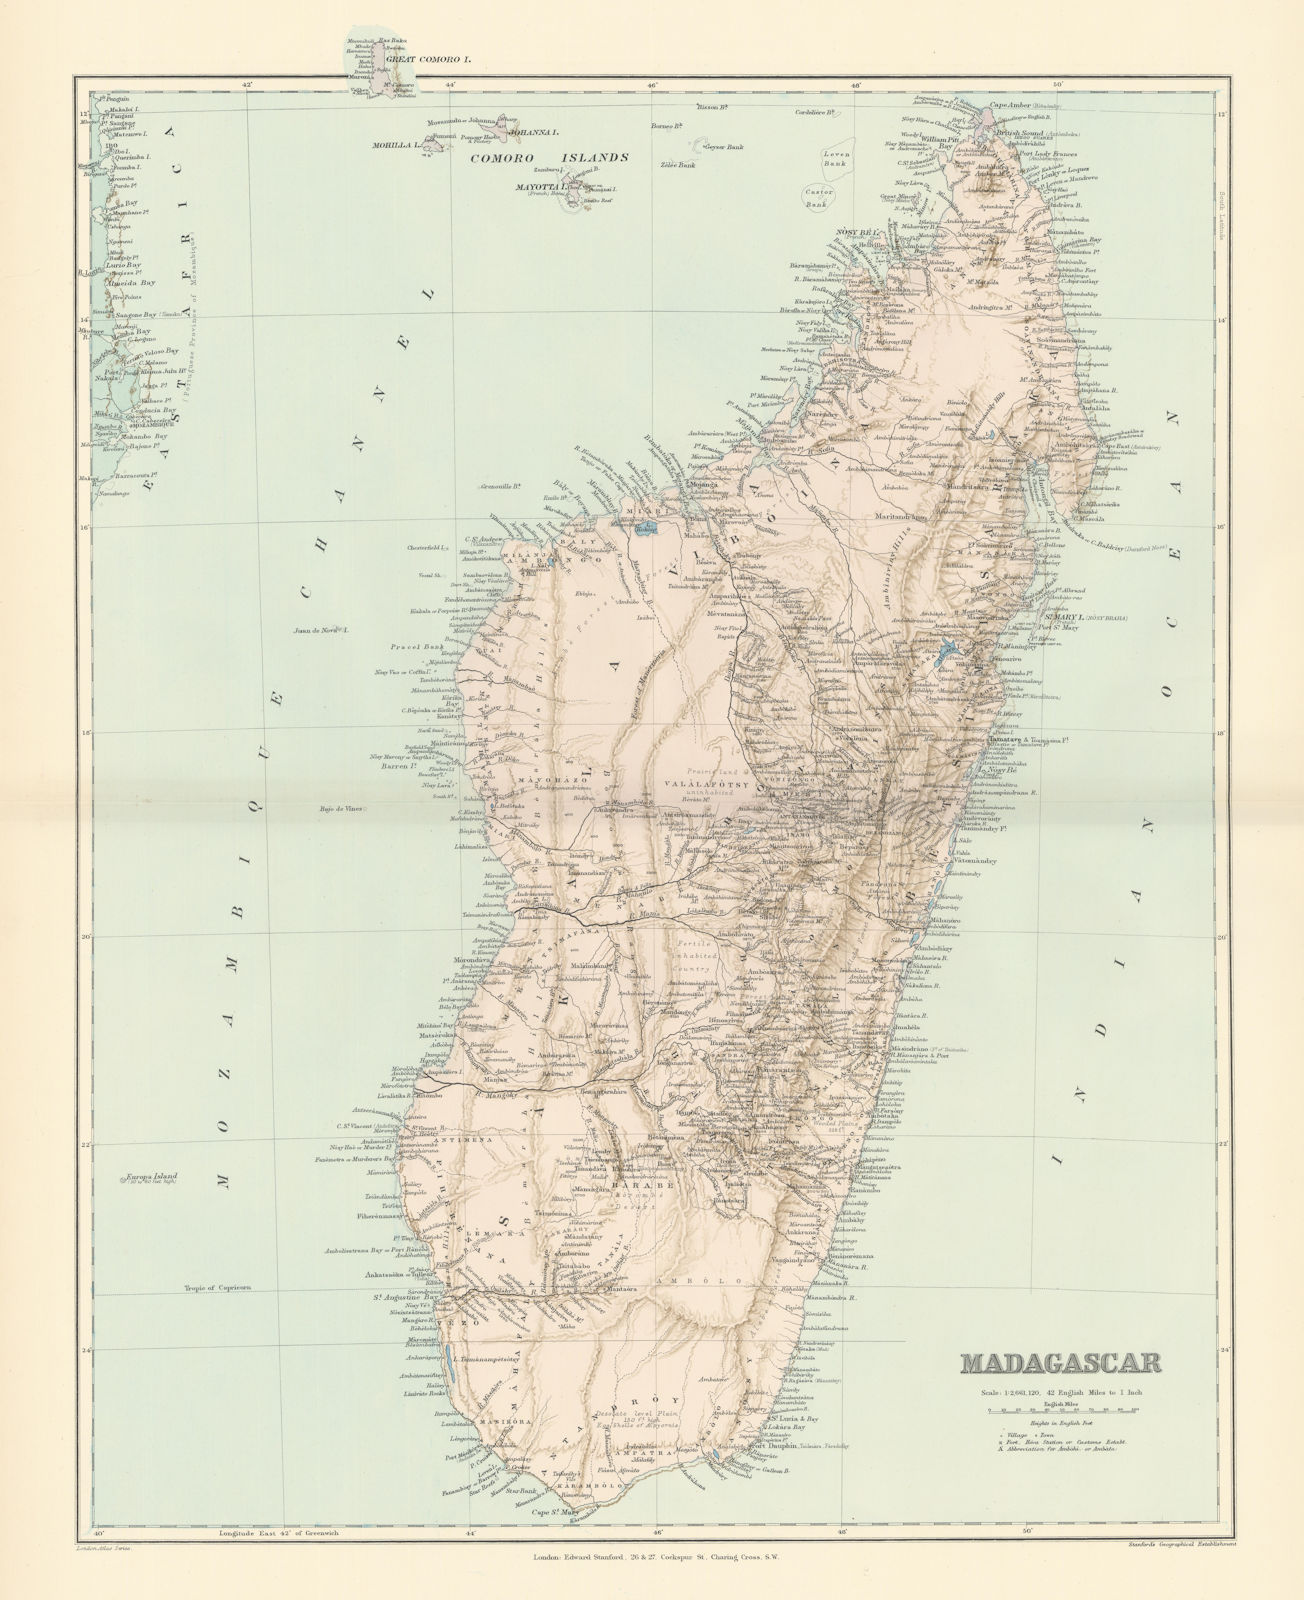 Madagascar, Comoros & Mayotte. Mozambique coast. 50x64cm STANFORD 1896 old map